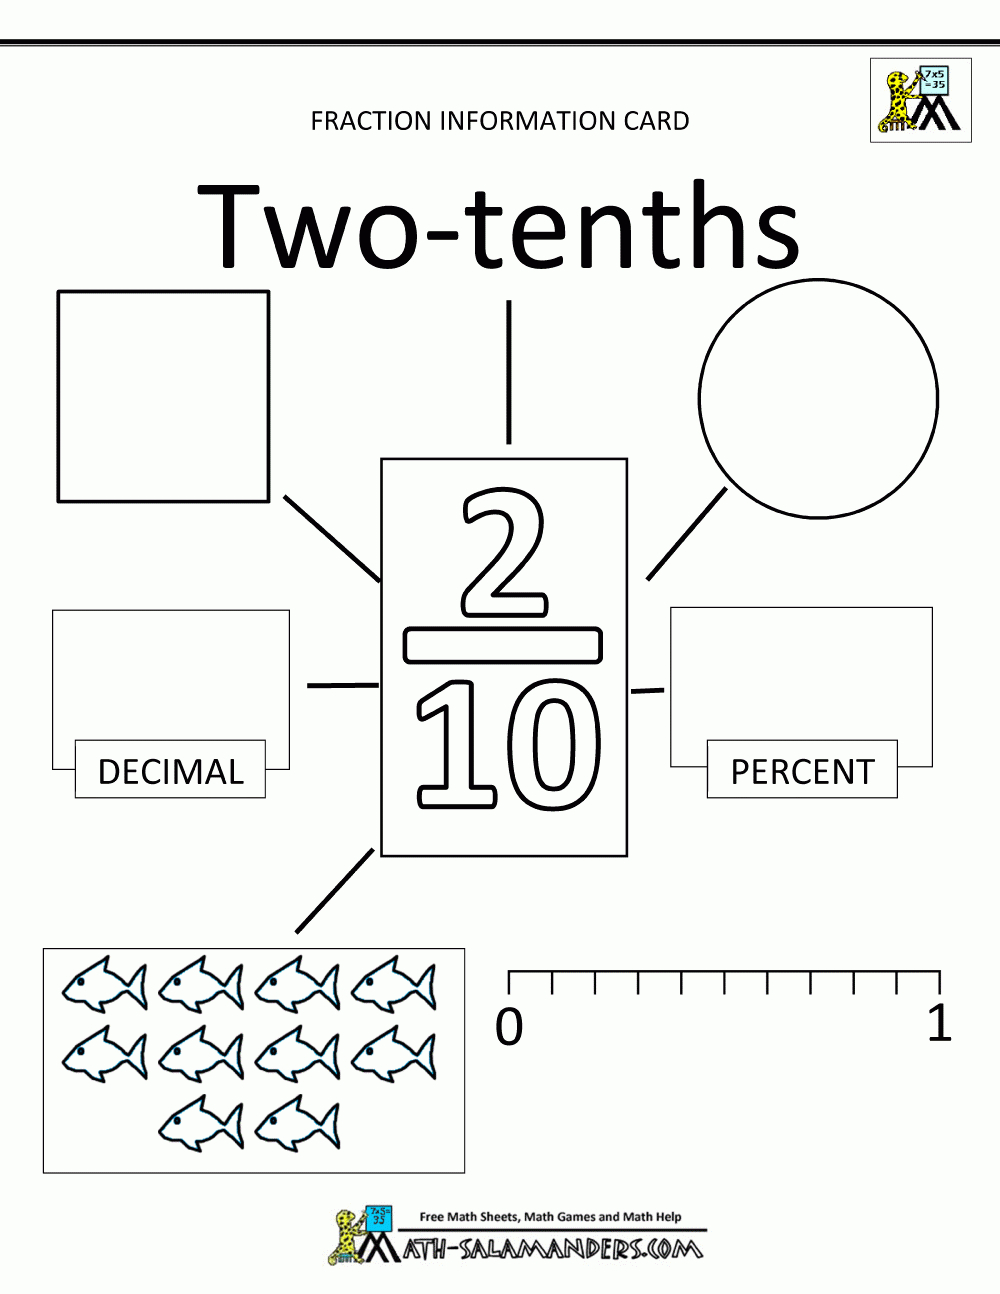 Fractions Decimals Percents  Fractions Information Cards Tenths Together With Fraction Decimal Percent Worksheet